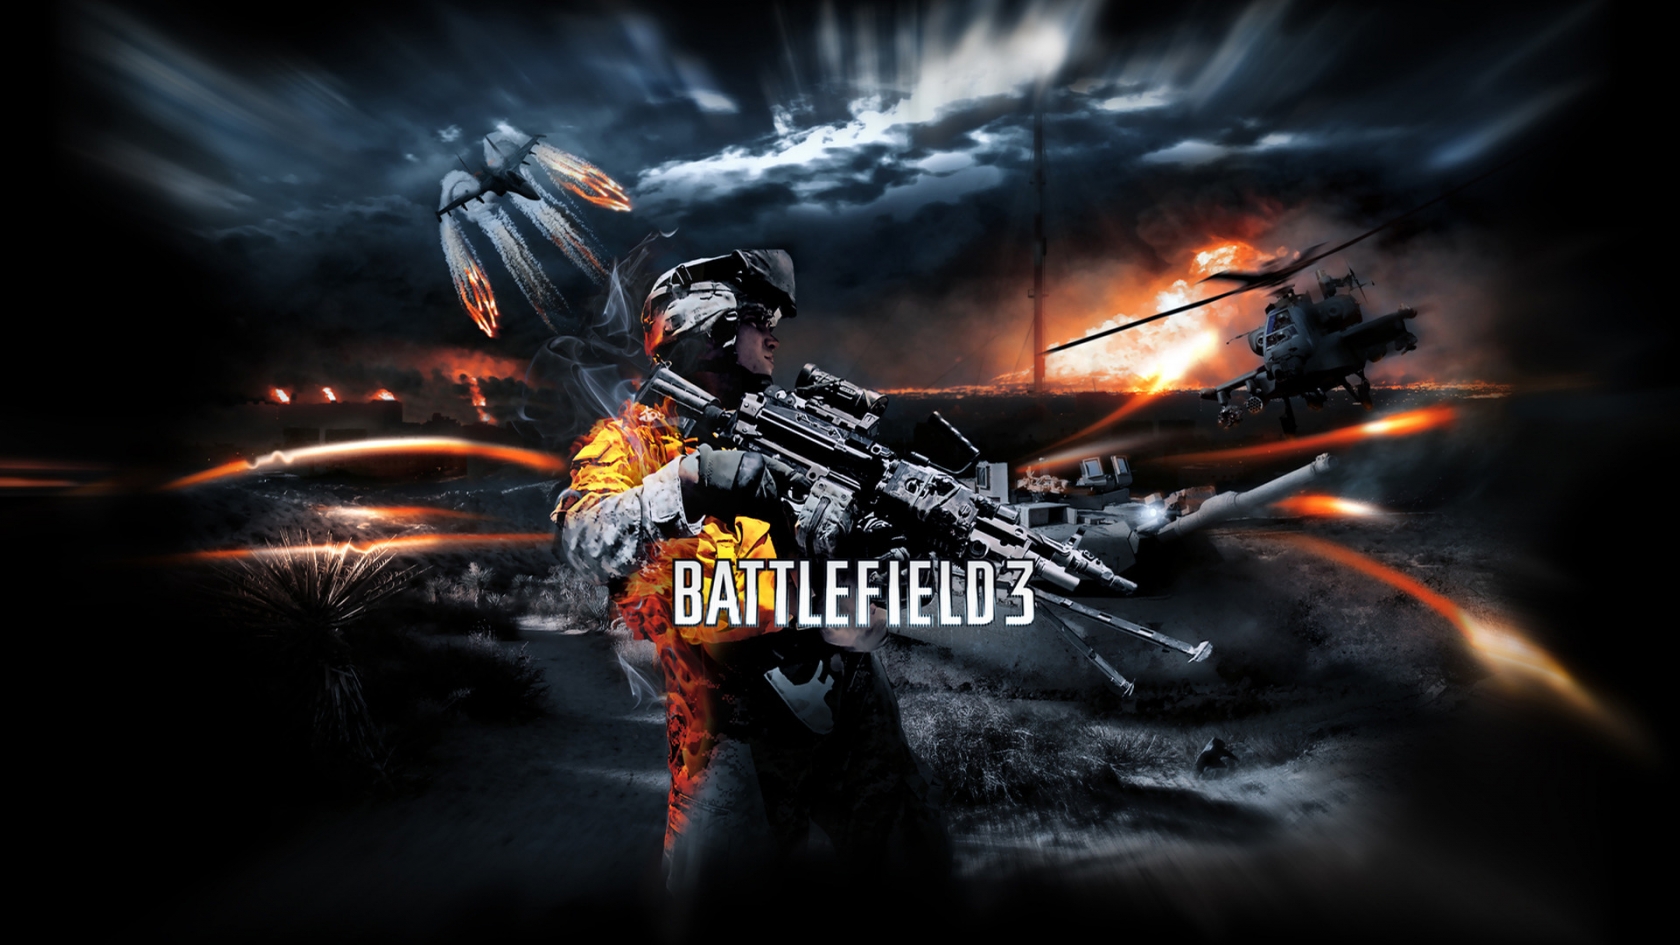 Battlefield 3 Poster for 1680 x 945 HDTV resolution